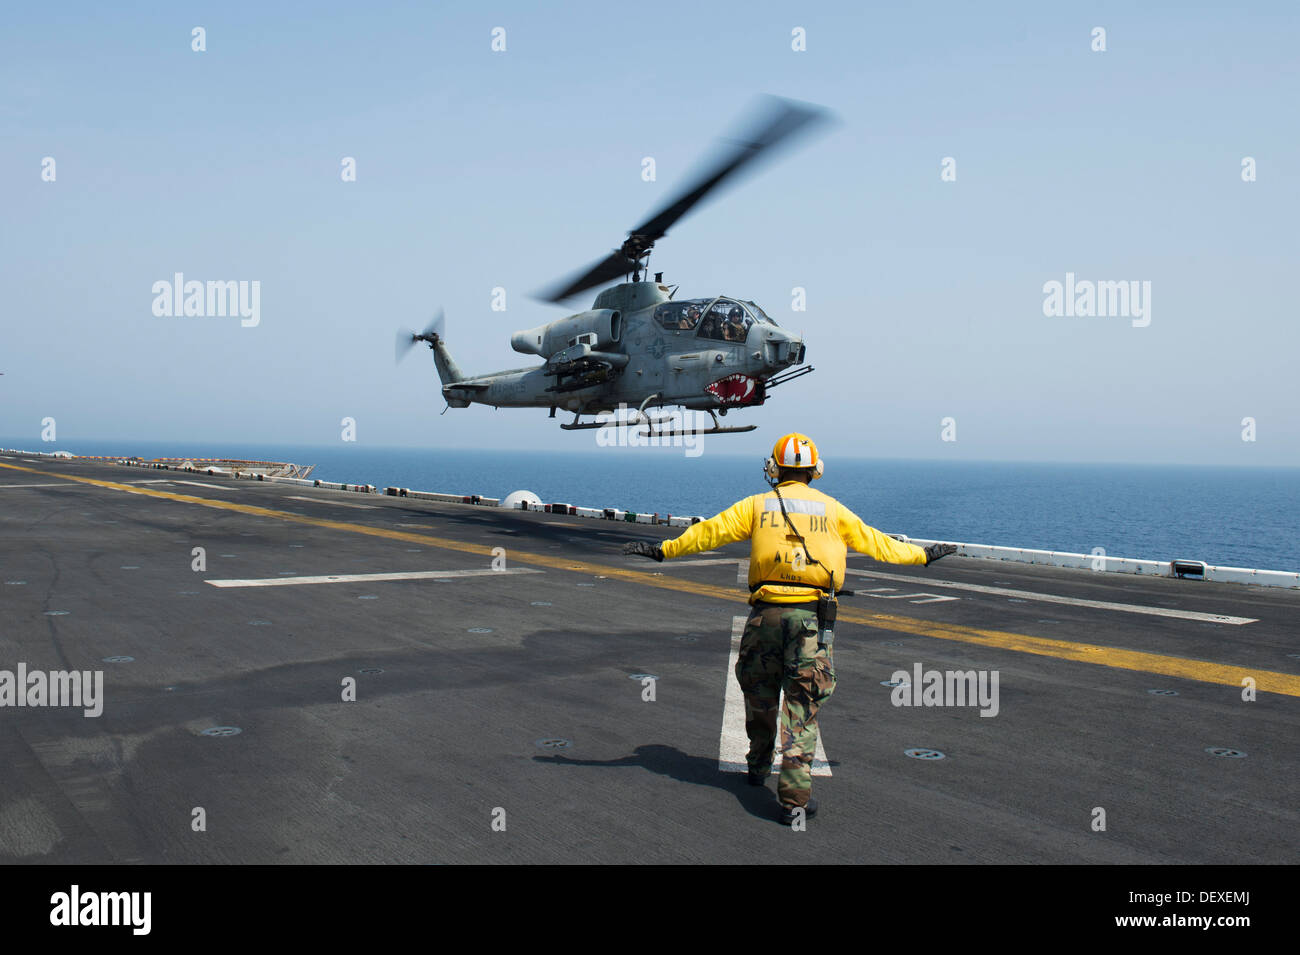 AH-1W Super Cobra du milieu marin de l'escadron à rotors basculants (VMM) 266 (rein) décolle de l'envol de l'assau amphibie Banque D'Images